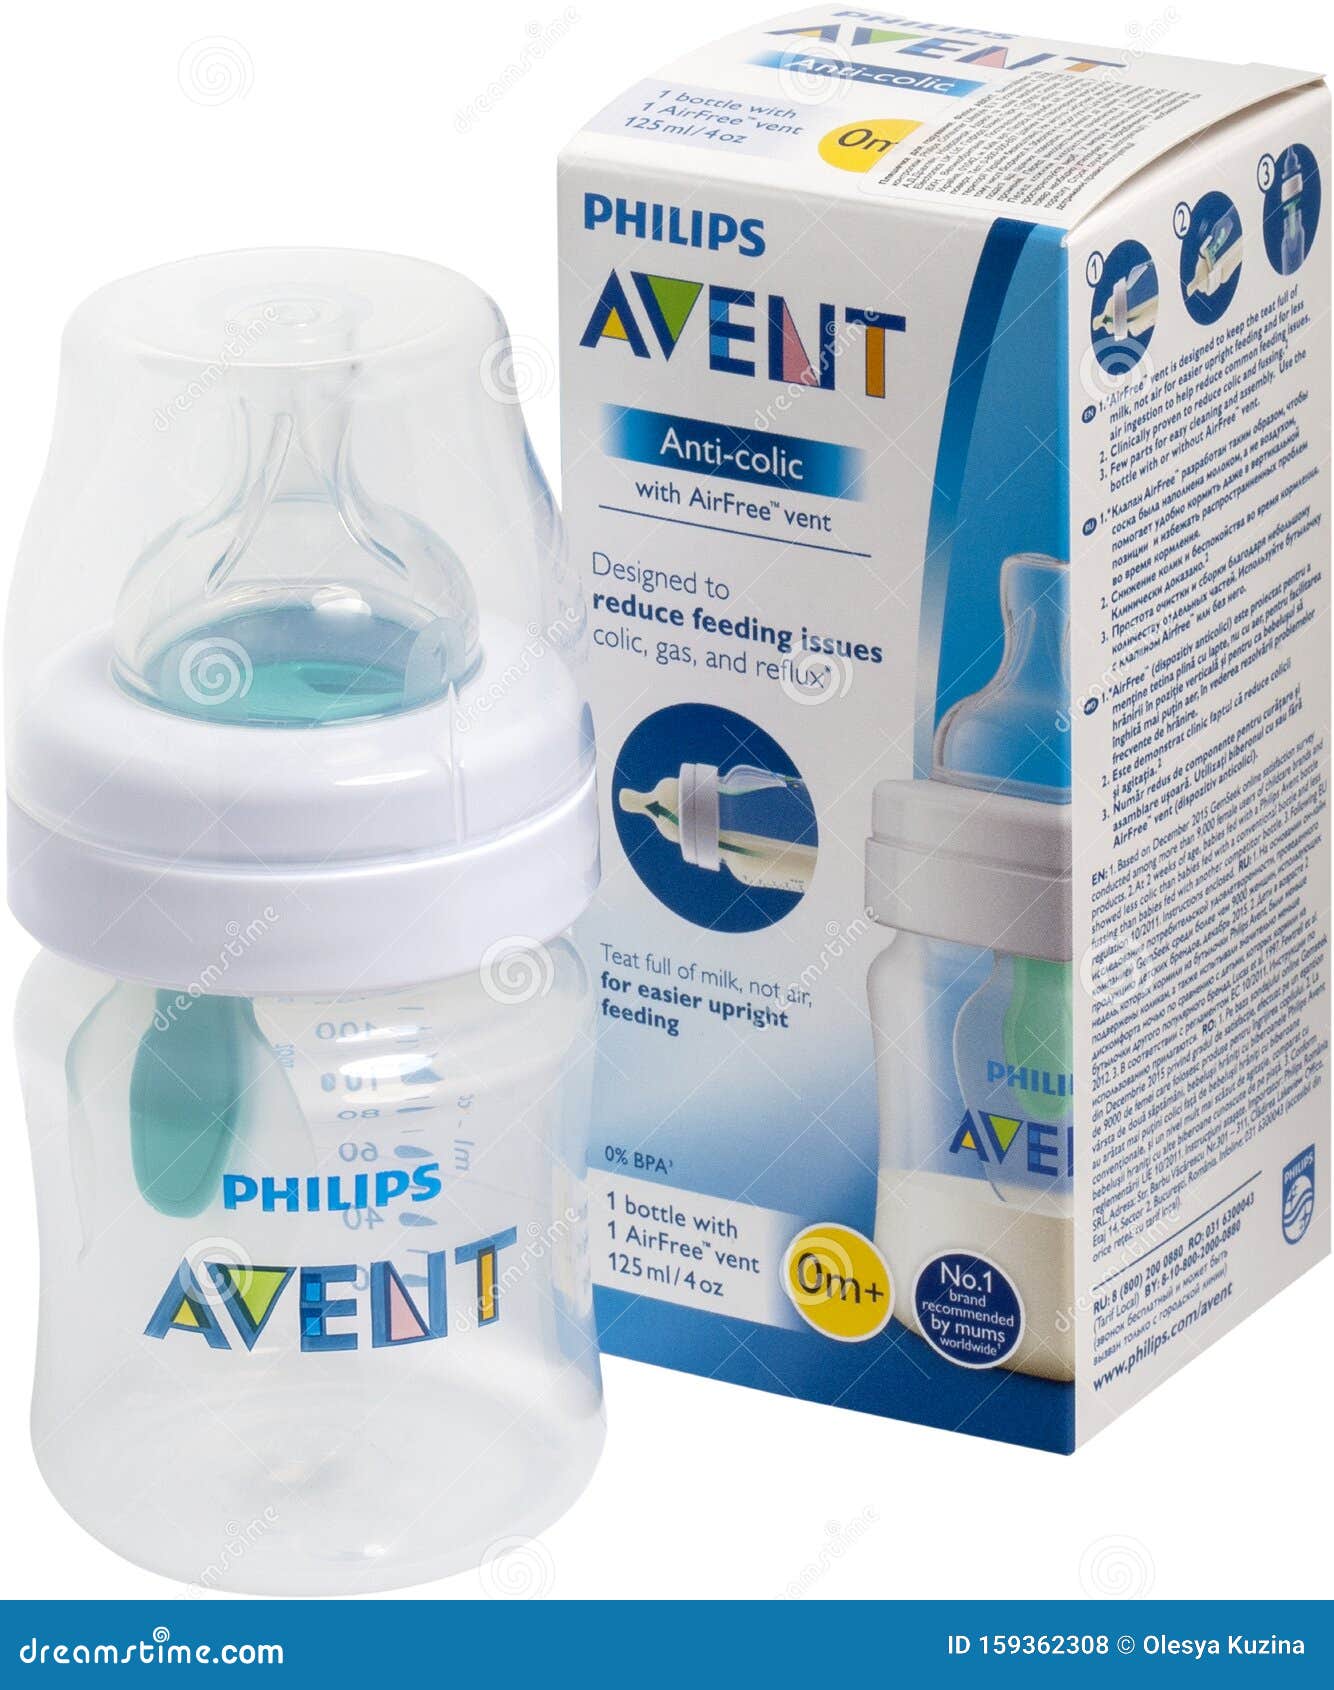 https://thumbs.dreamstime.com/z/kiev-ukraine-september-feeding-bottle-philips-avent-anti-colic-airfree-valve-nipple-filled-m-milk-even-if-159362308.jpg